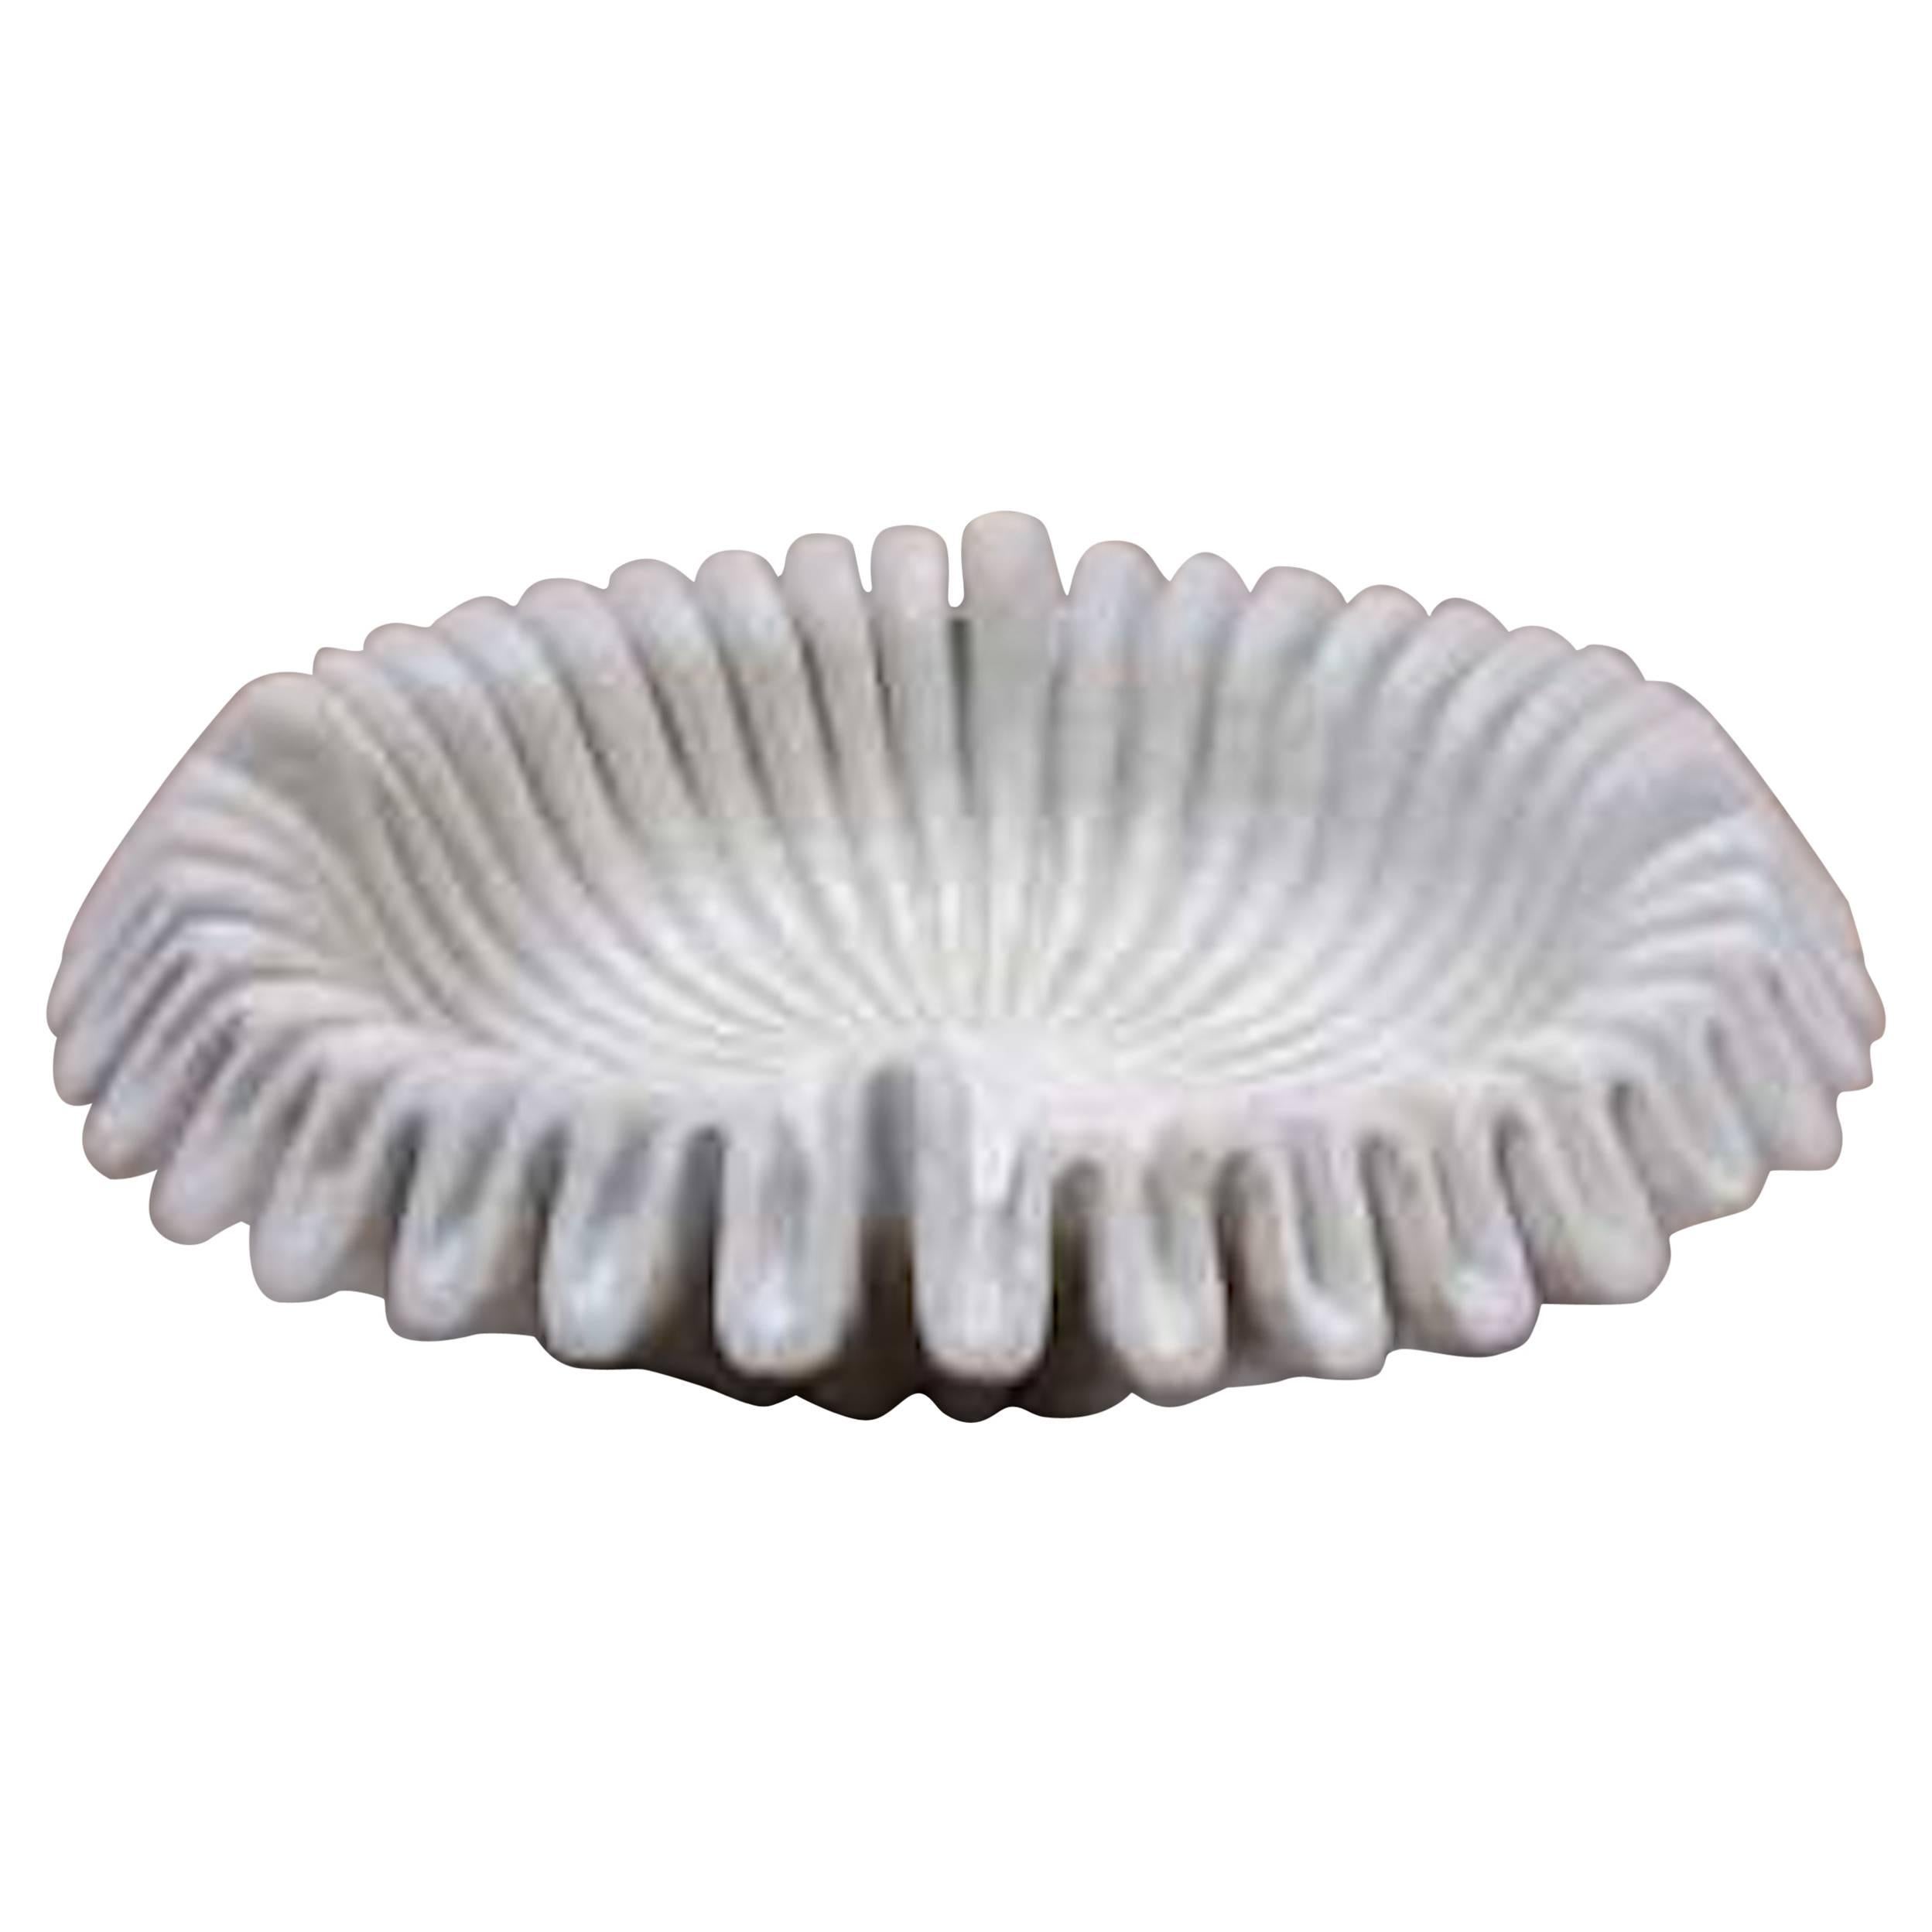 Marble Folded Rim Bowl, India, Contemporary